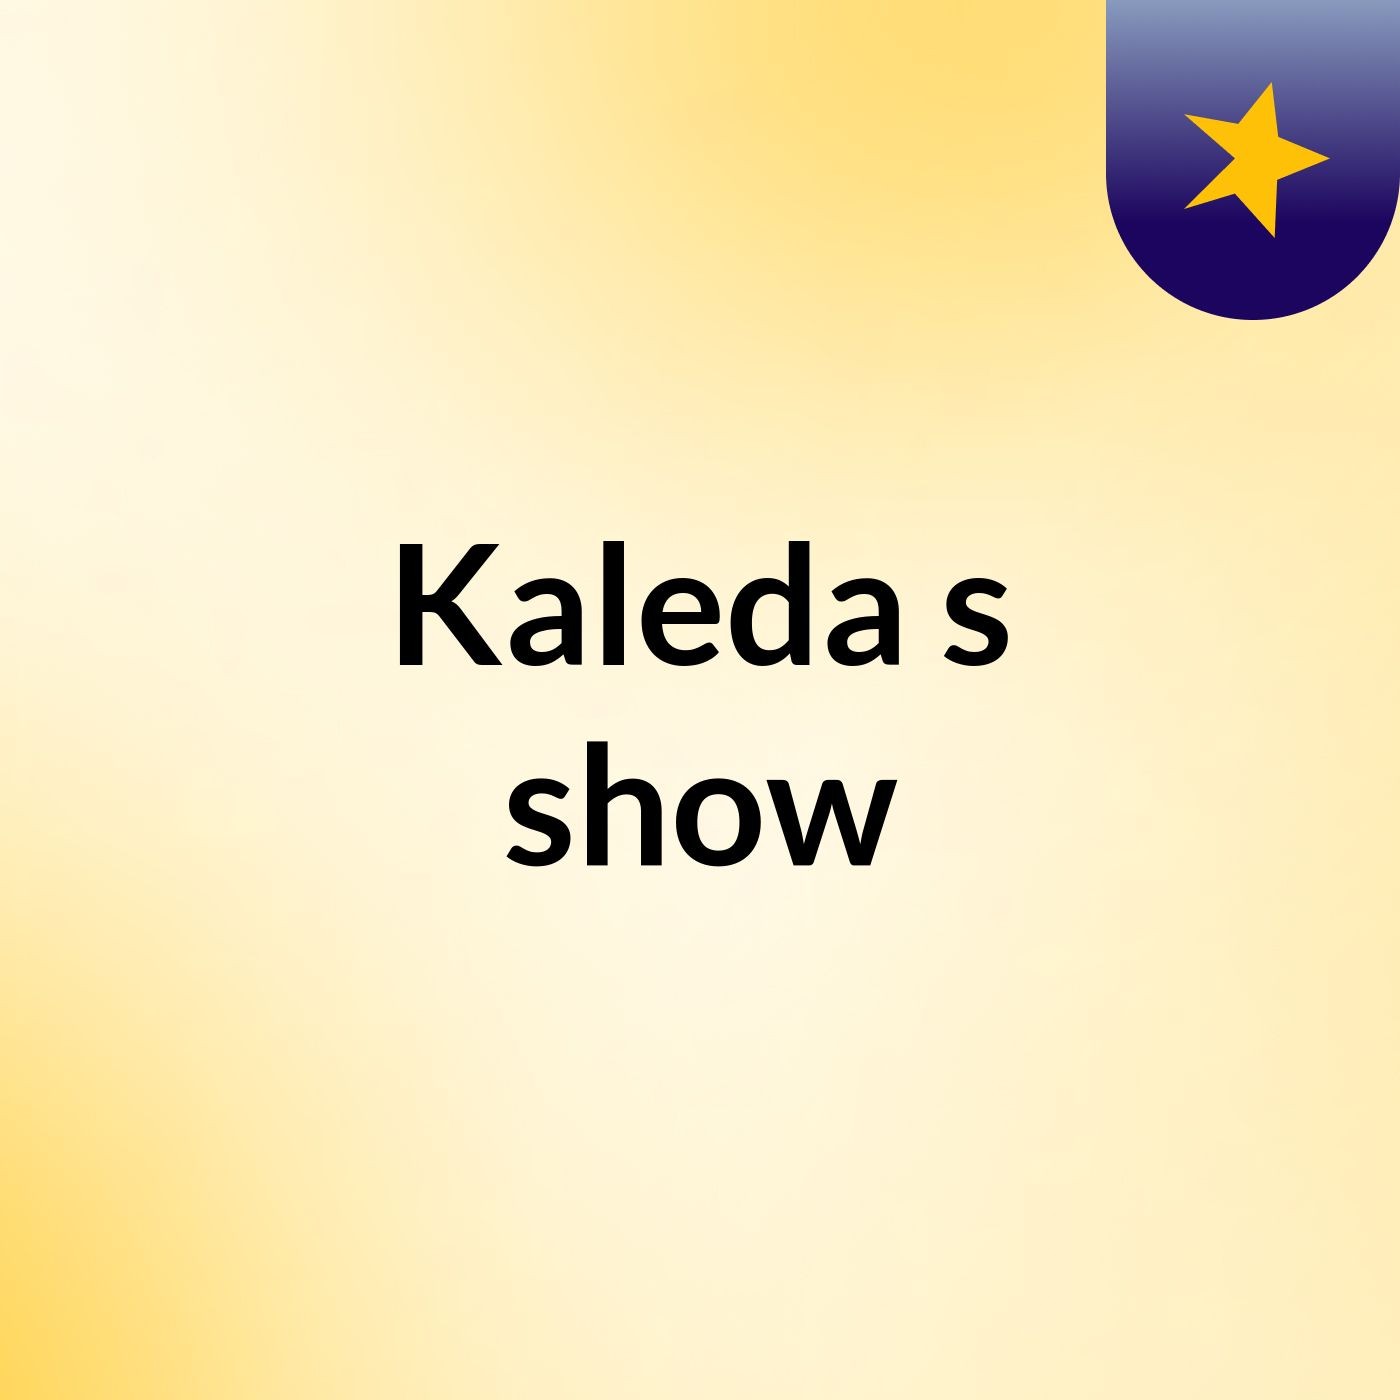 Kaleda's show